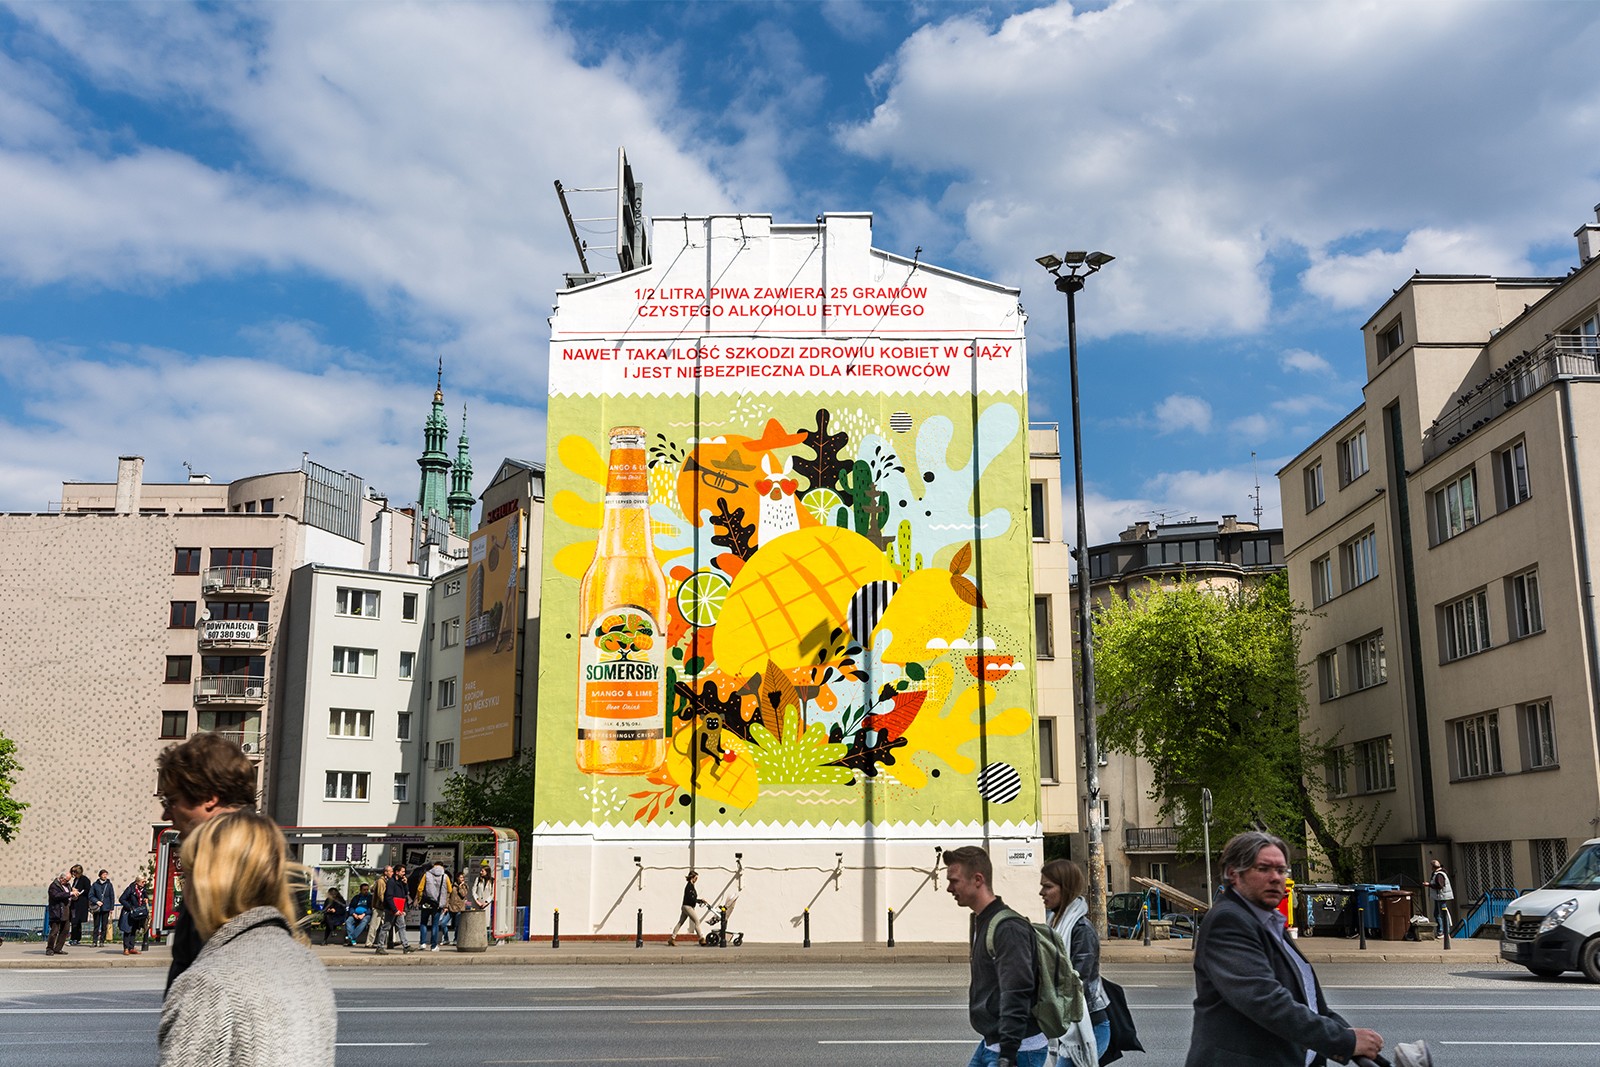 Advertising mural for Somersby Mango Lime next to Politechnika metro station | Somersby Mango & Lime | Portfolio